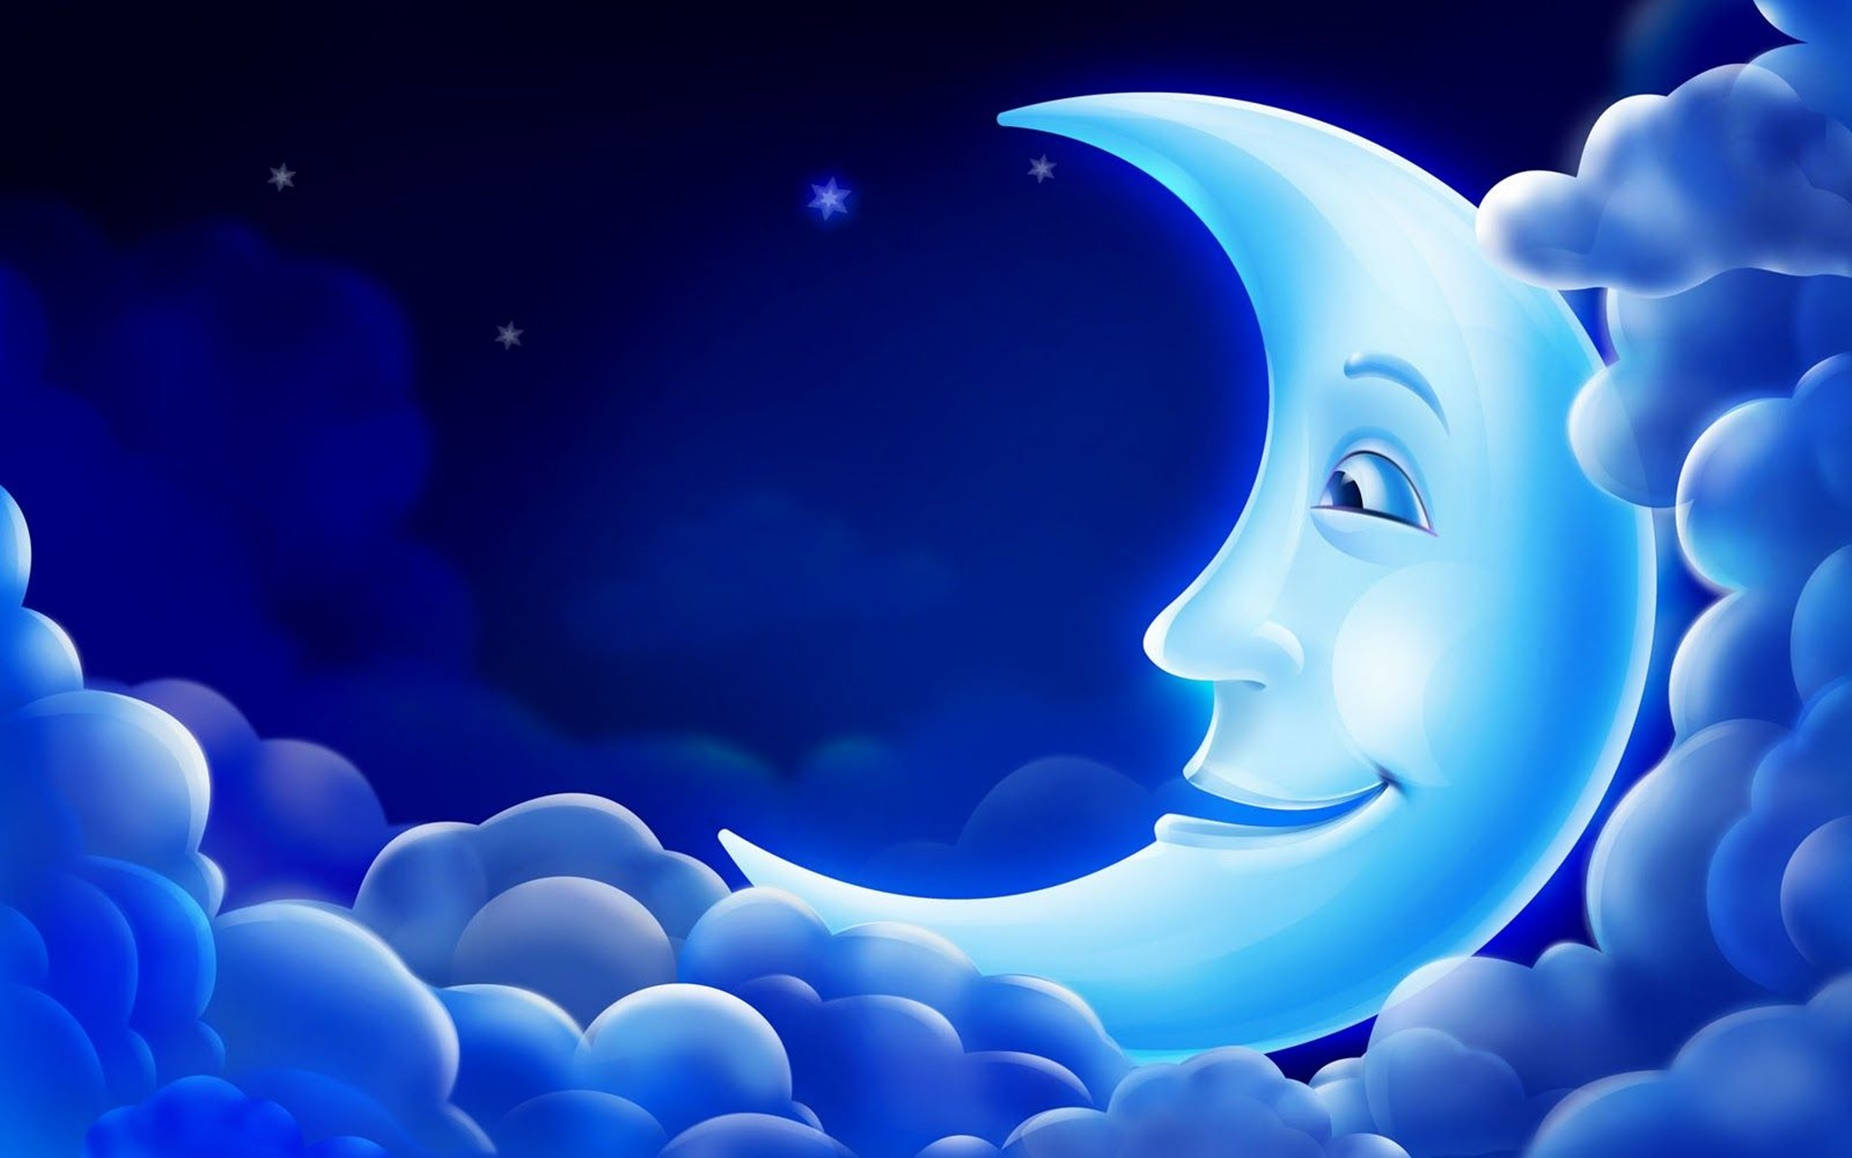 Smiling Crescent Moon 3d Animation Wallpaper